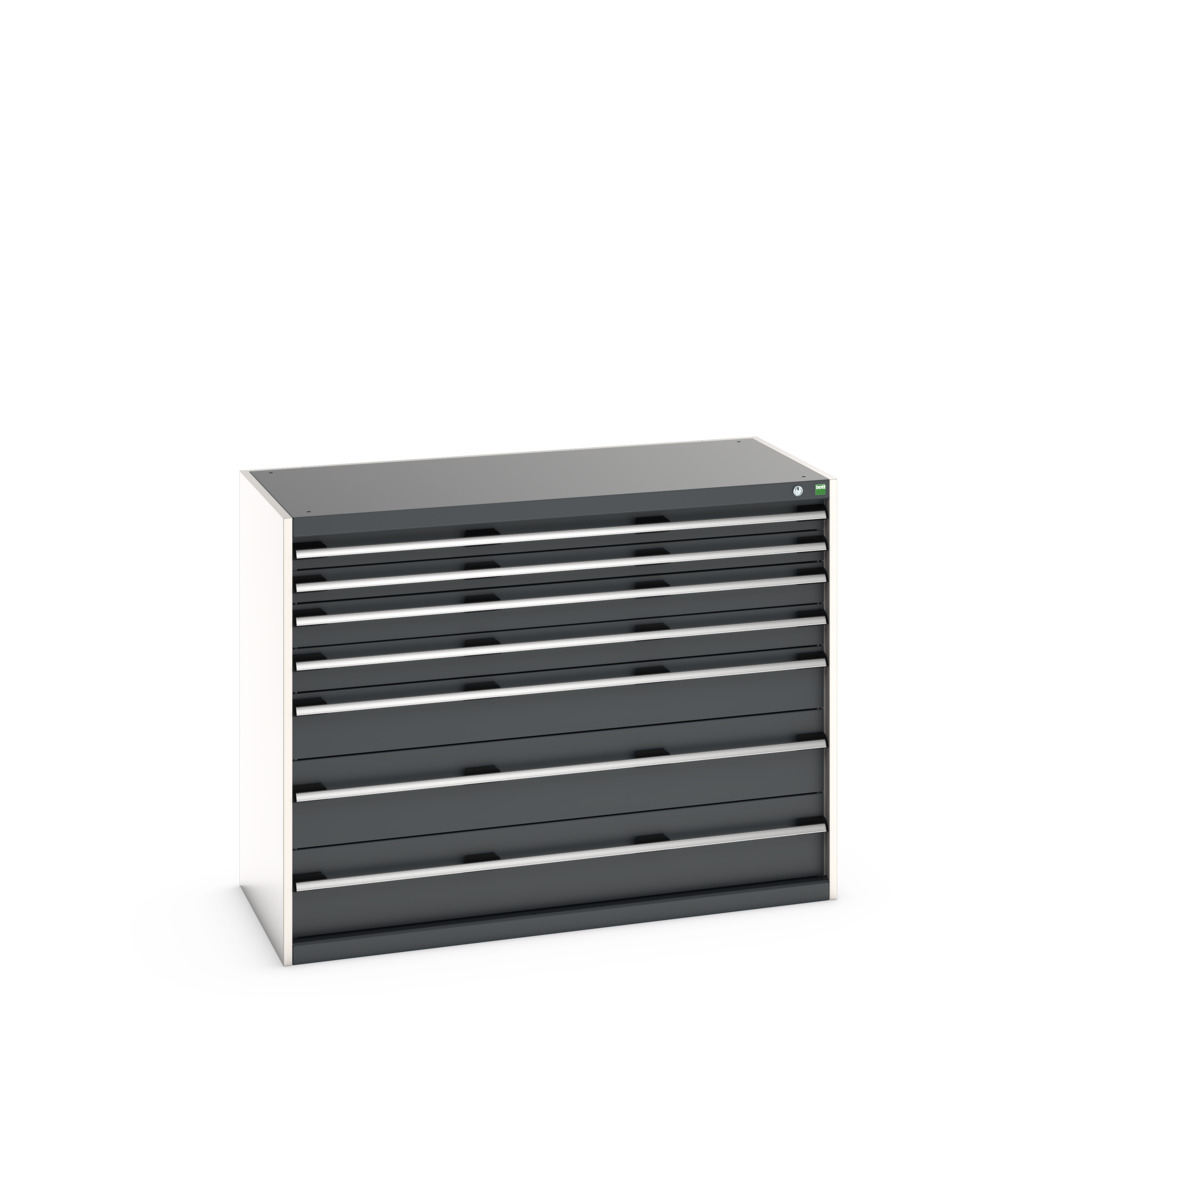 40022126. - cubio drawer cabinet